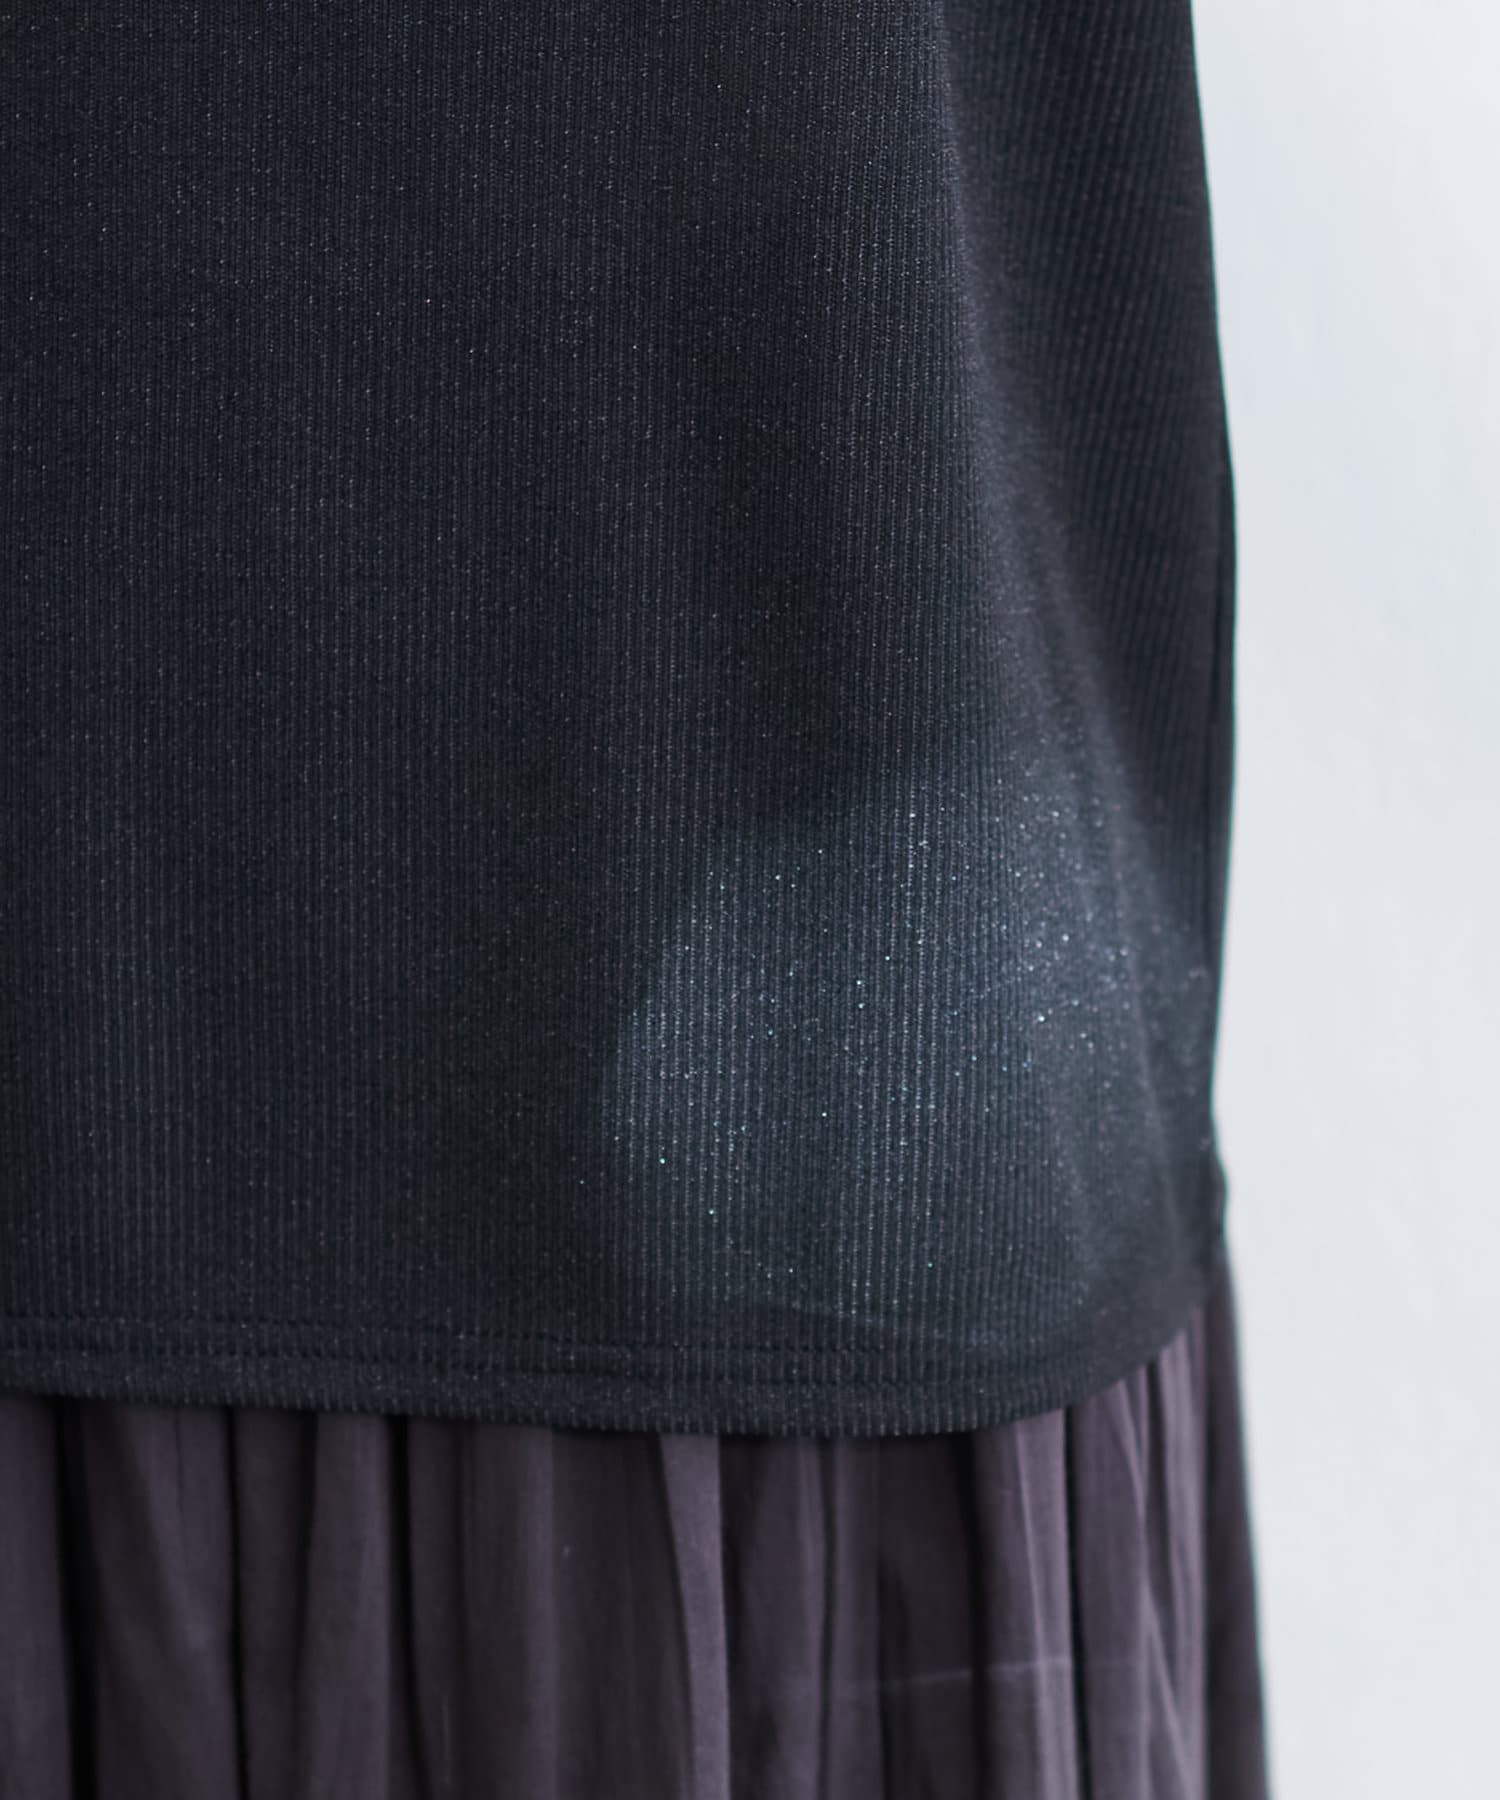 natural couture(ナチュラルクチュール) シアーラメテレコボリューム袖TOPS